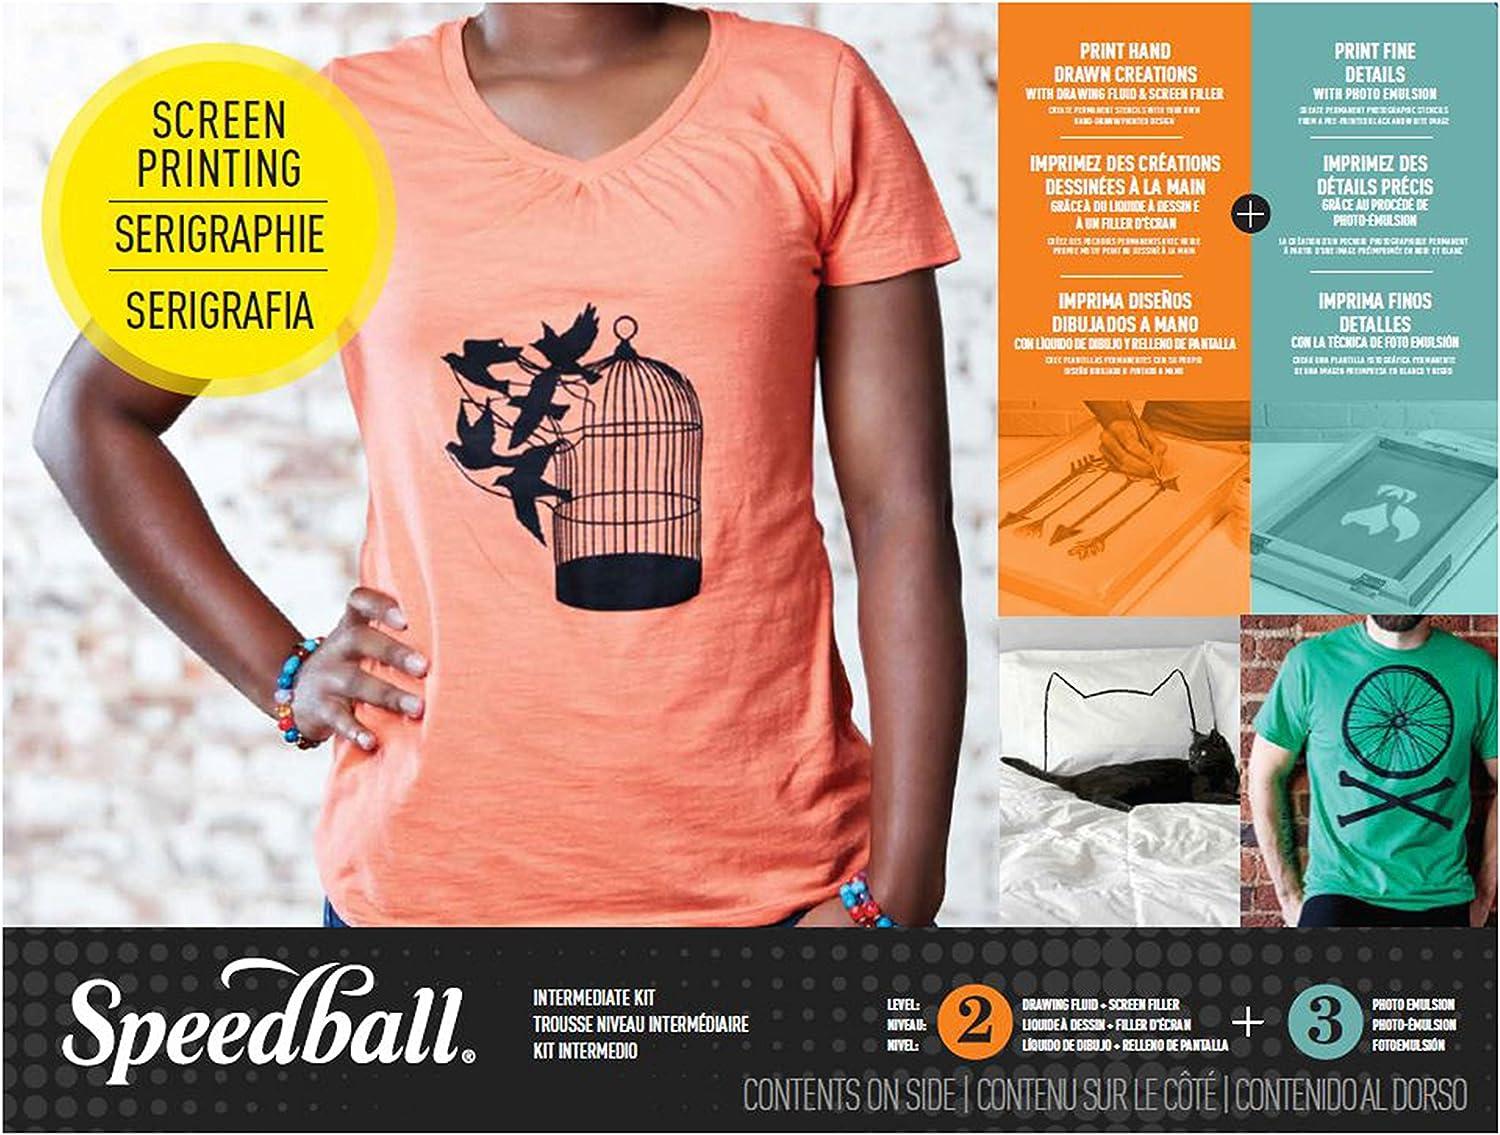  Speedball Intermediate Kit for Screen Printing